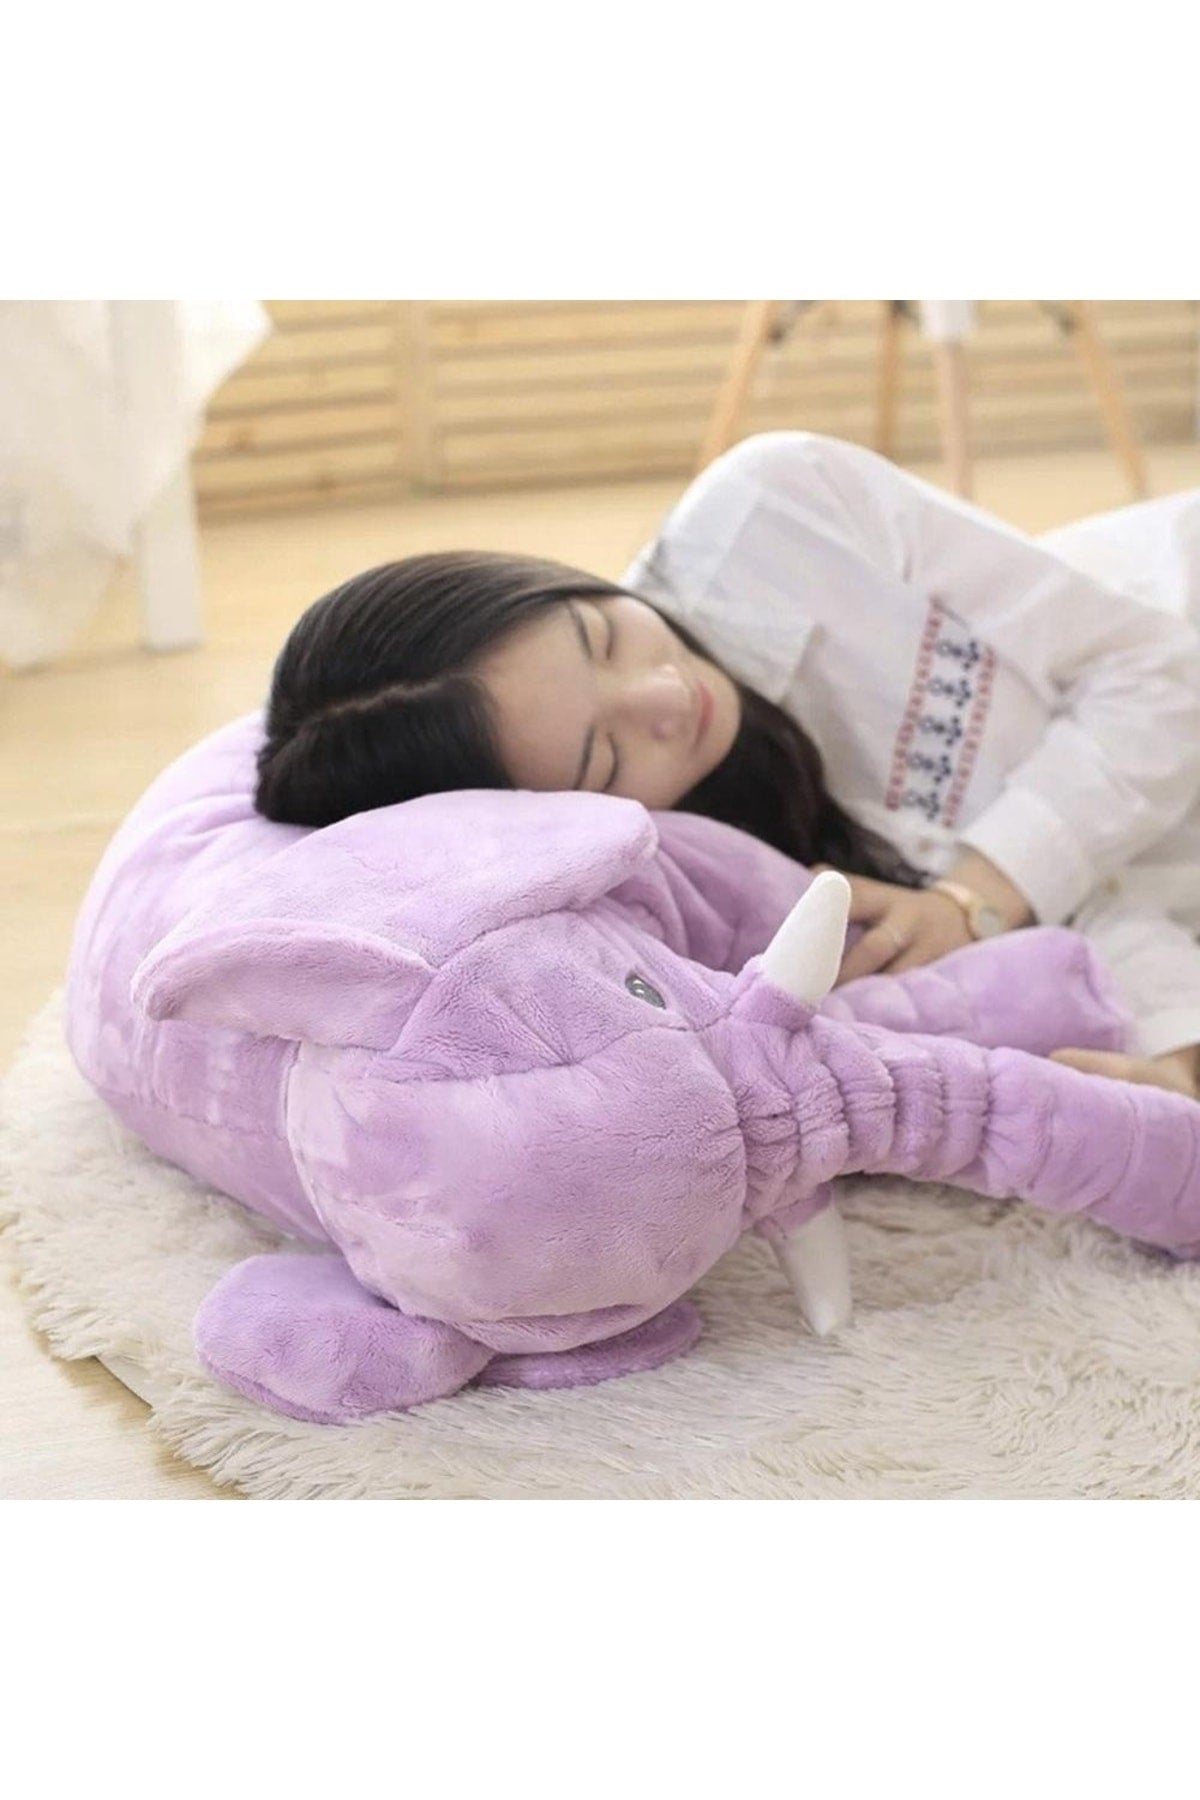 My Sleeping Friend Plush Sleeping Elephant 95 Cm